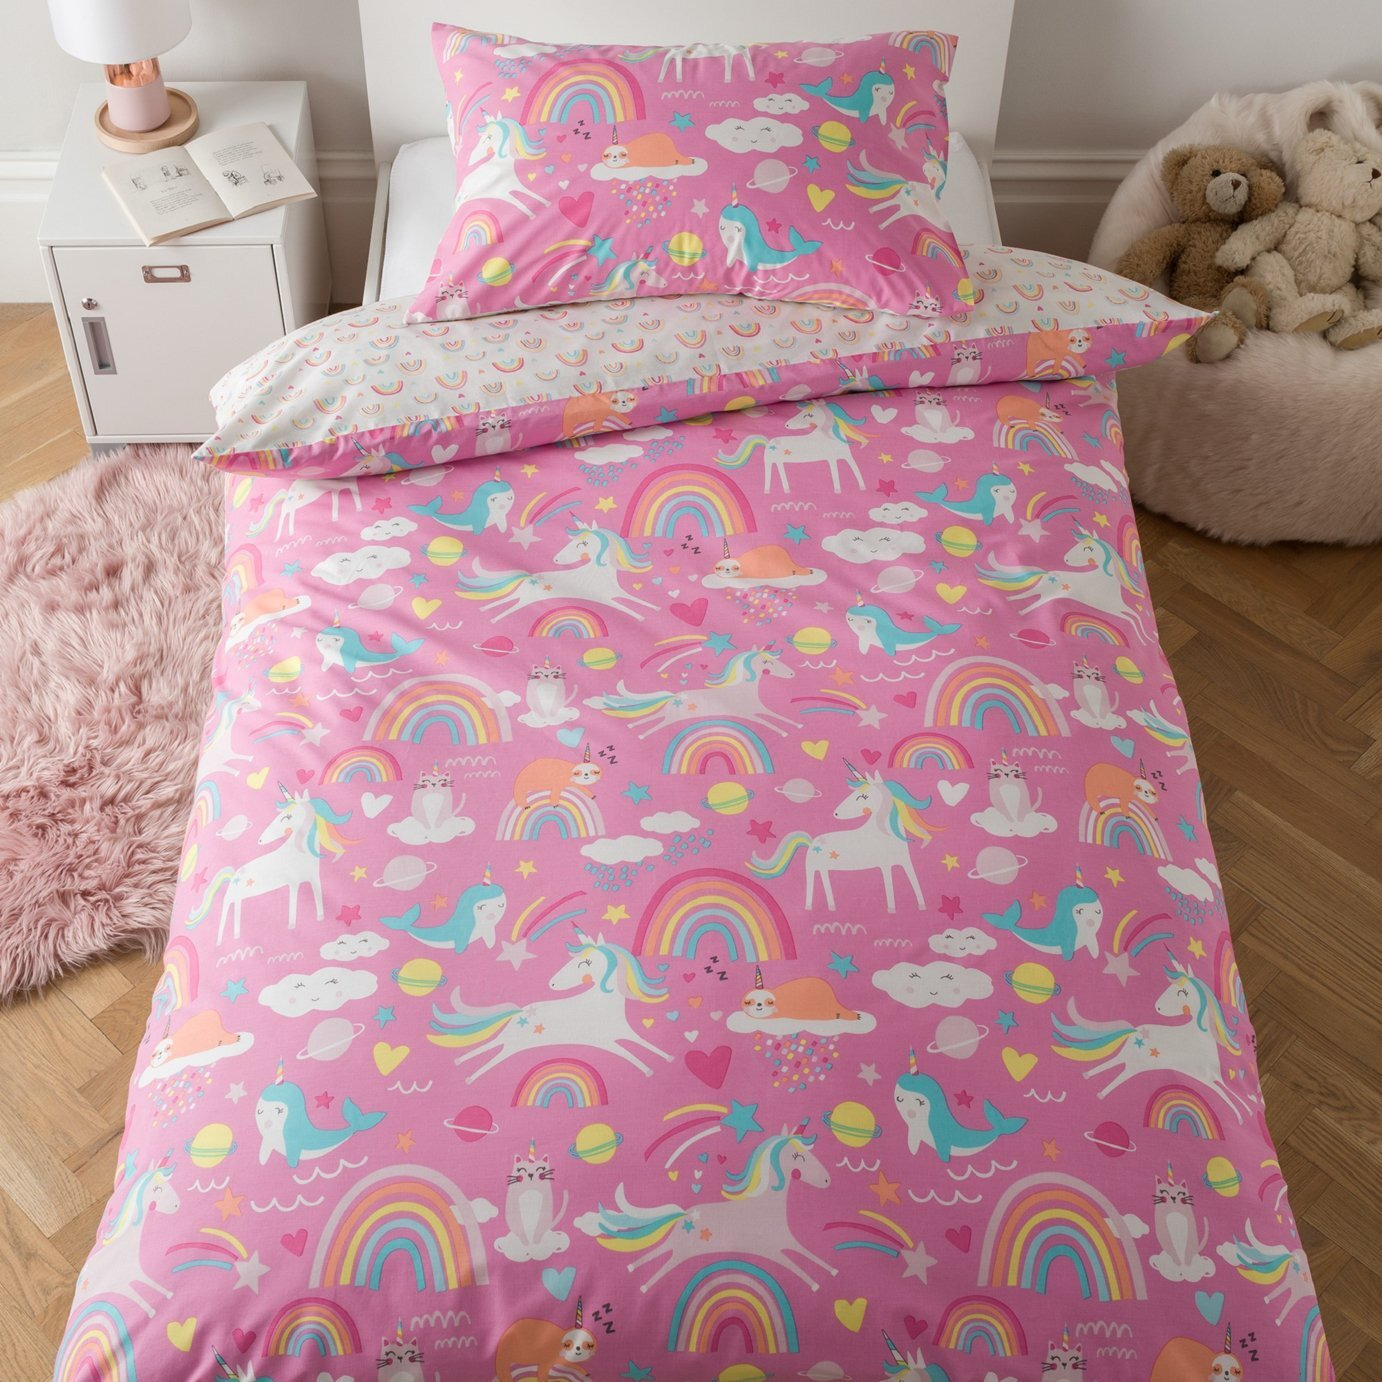 Argos Home Kids Pink Unicorn Bedding Set - Single - image 1